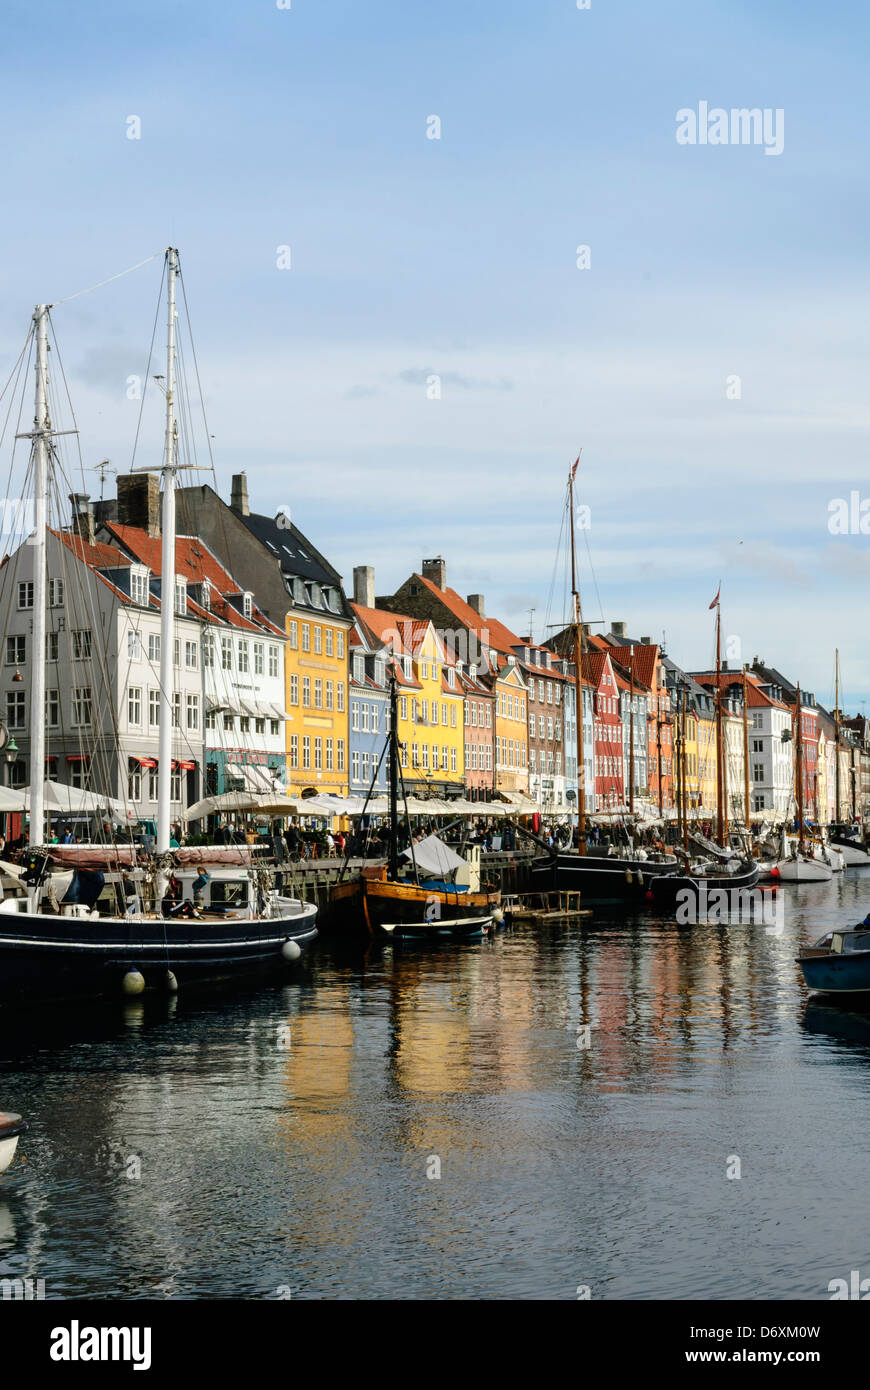 View of Nyhavn in Copenhagen, Denmark, Europe Image taken from public ground Stock Photo